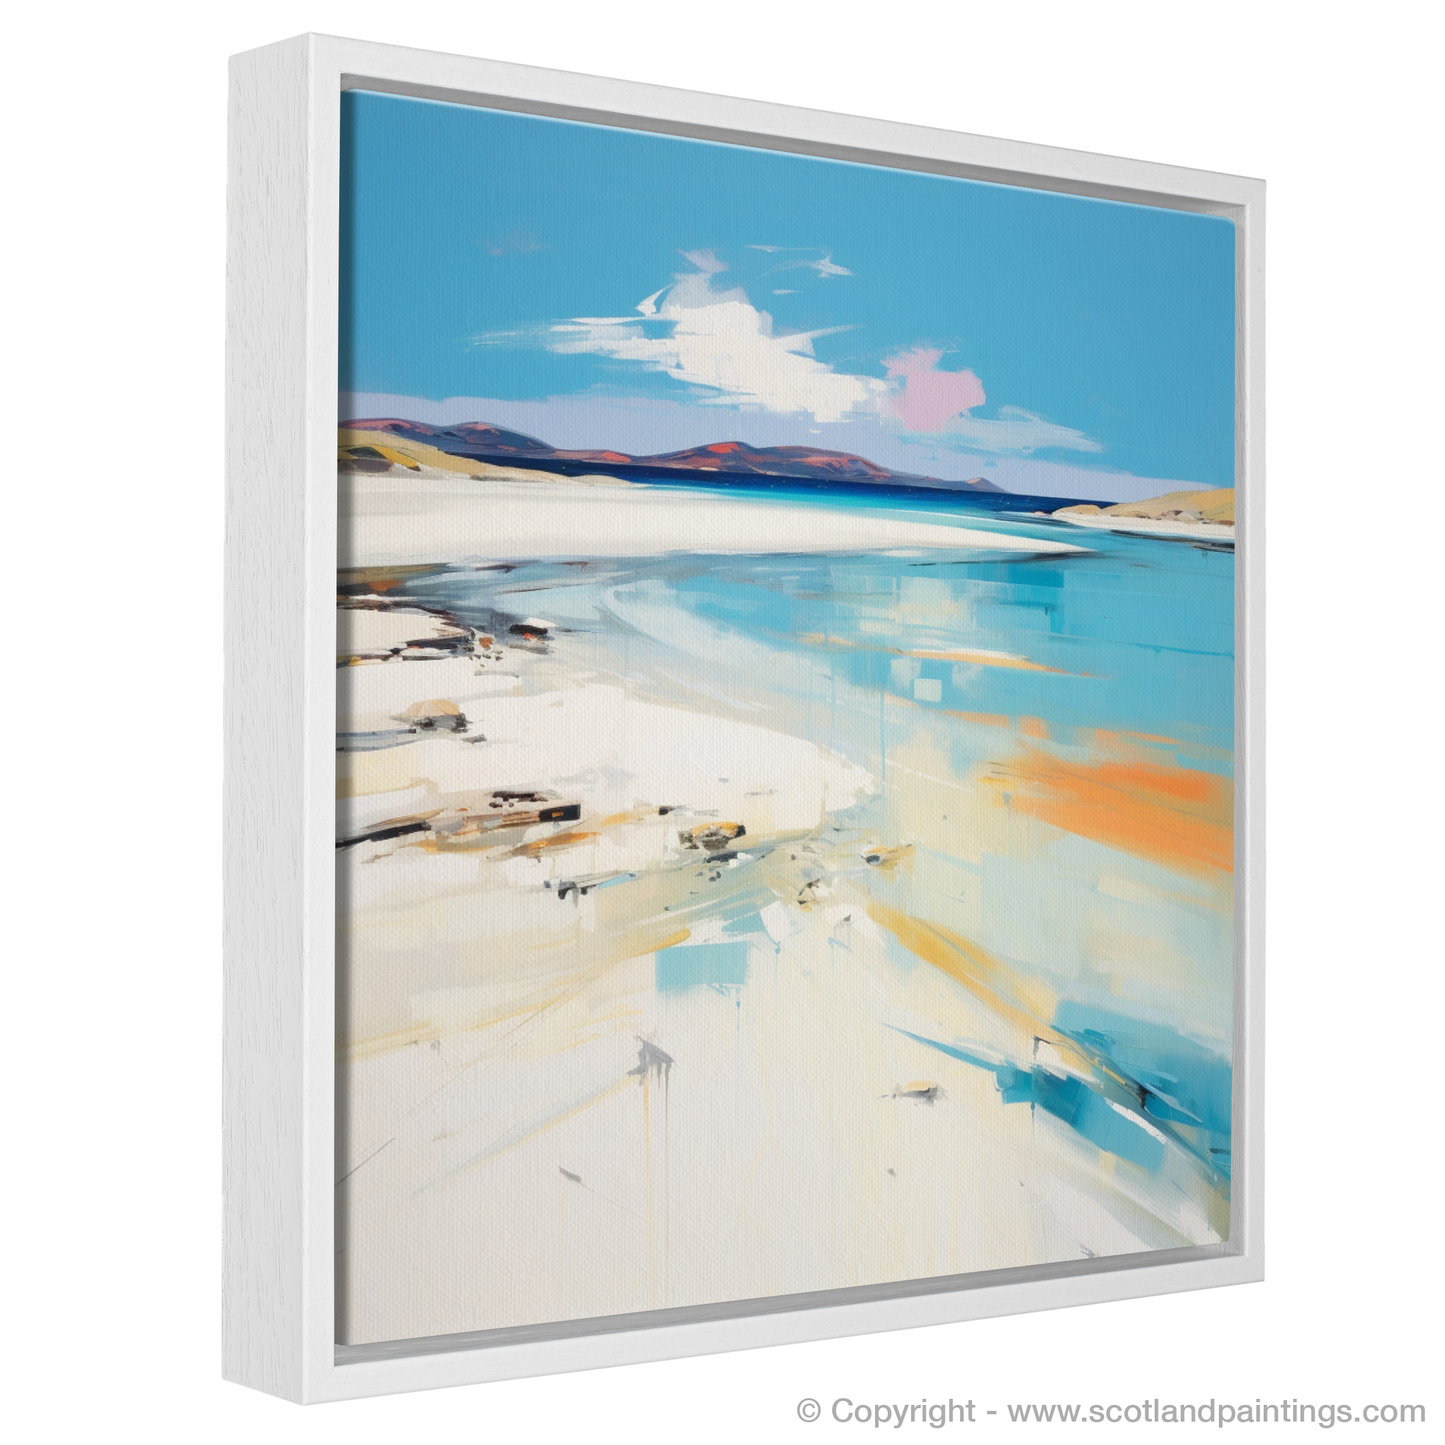 Painting and Art Print of Luskentyre Beach, Isle of Harris entitled "Ethereal Shores of Luskentyre Beach".